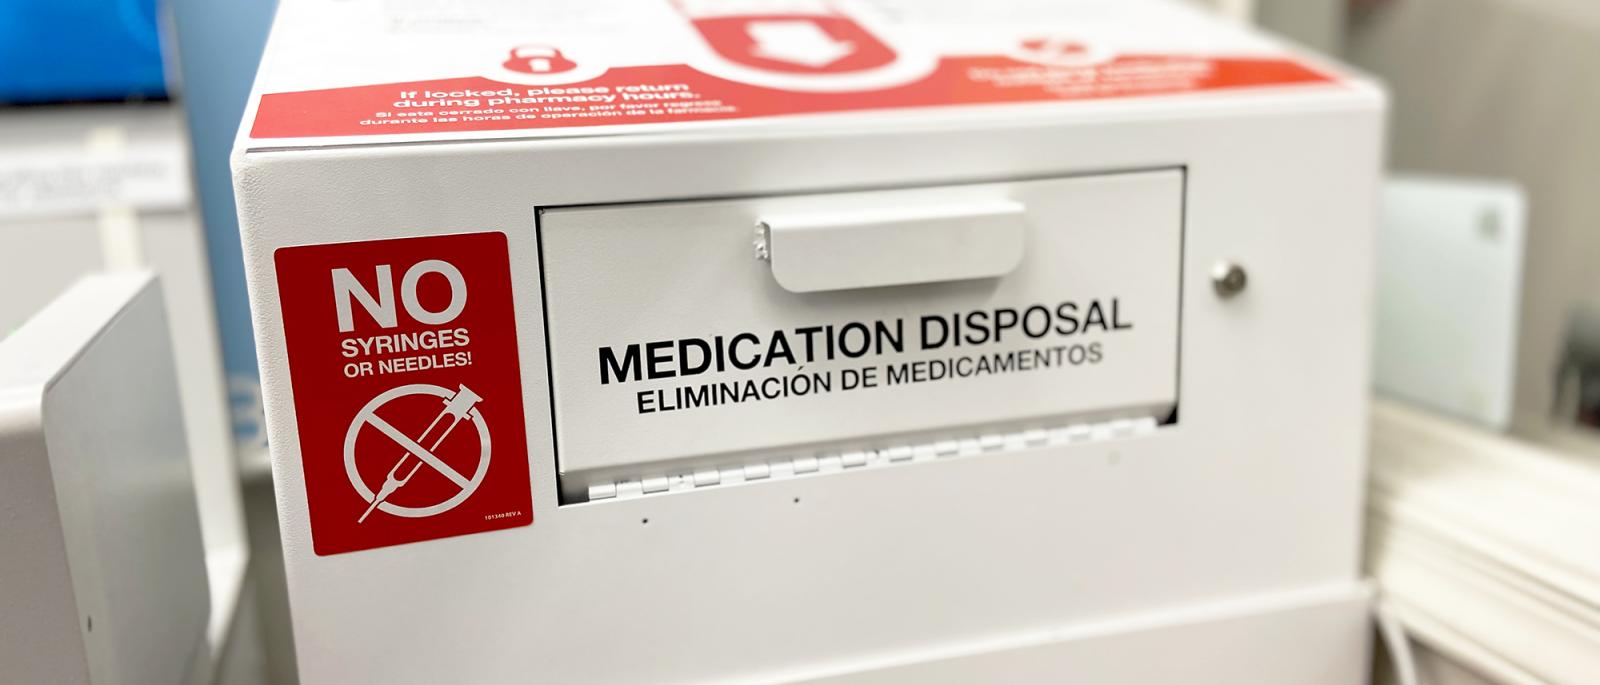 Medication Disposal